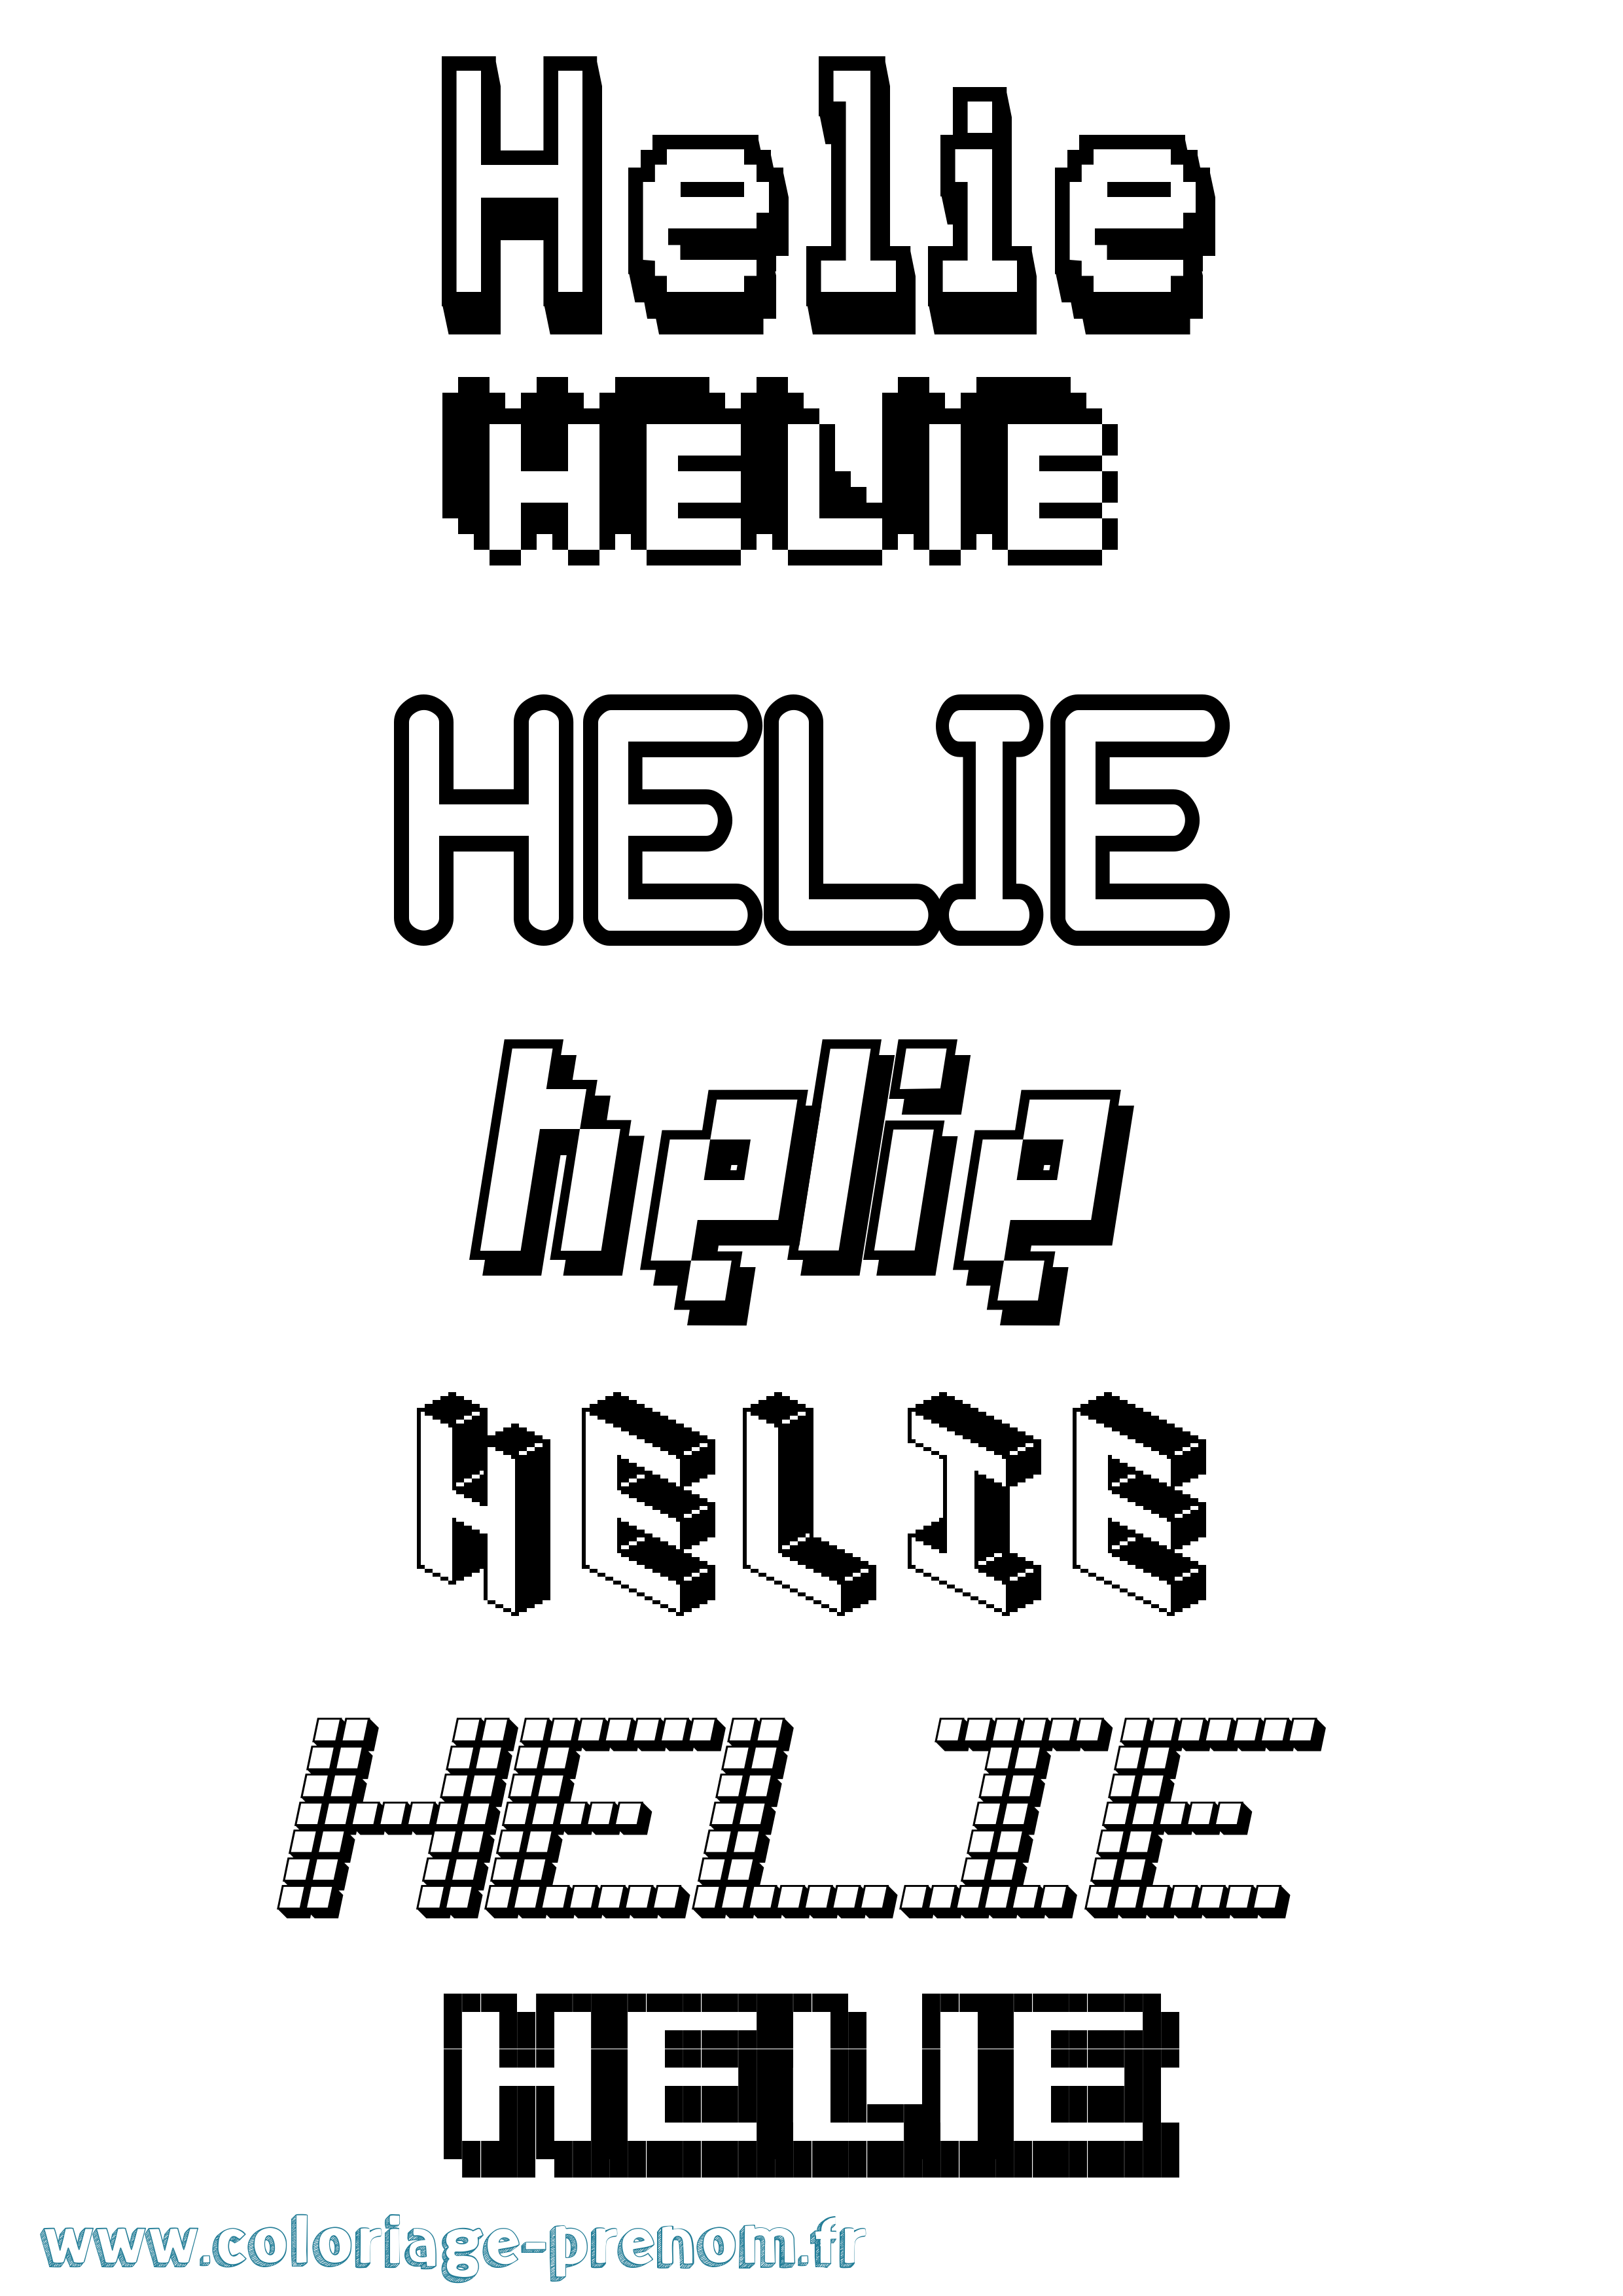 Coloriage prénom Helie